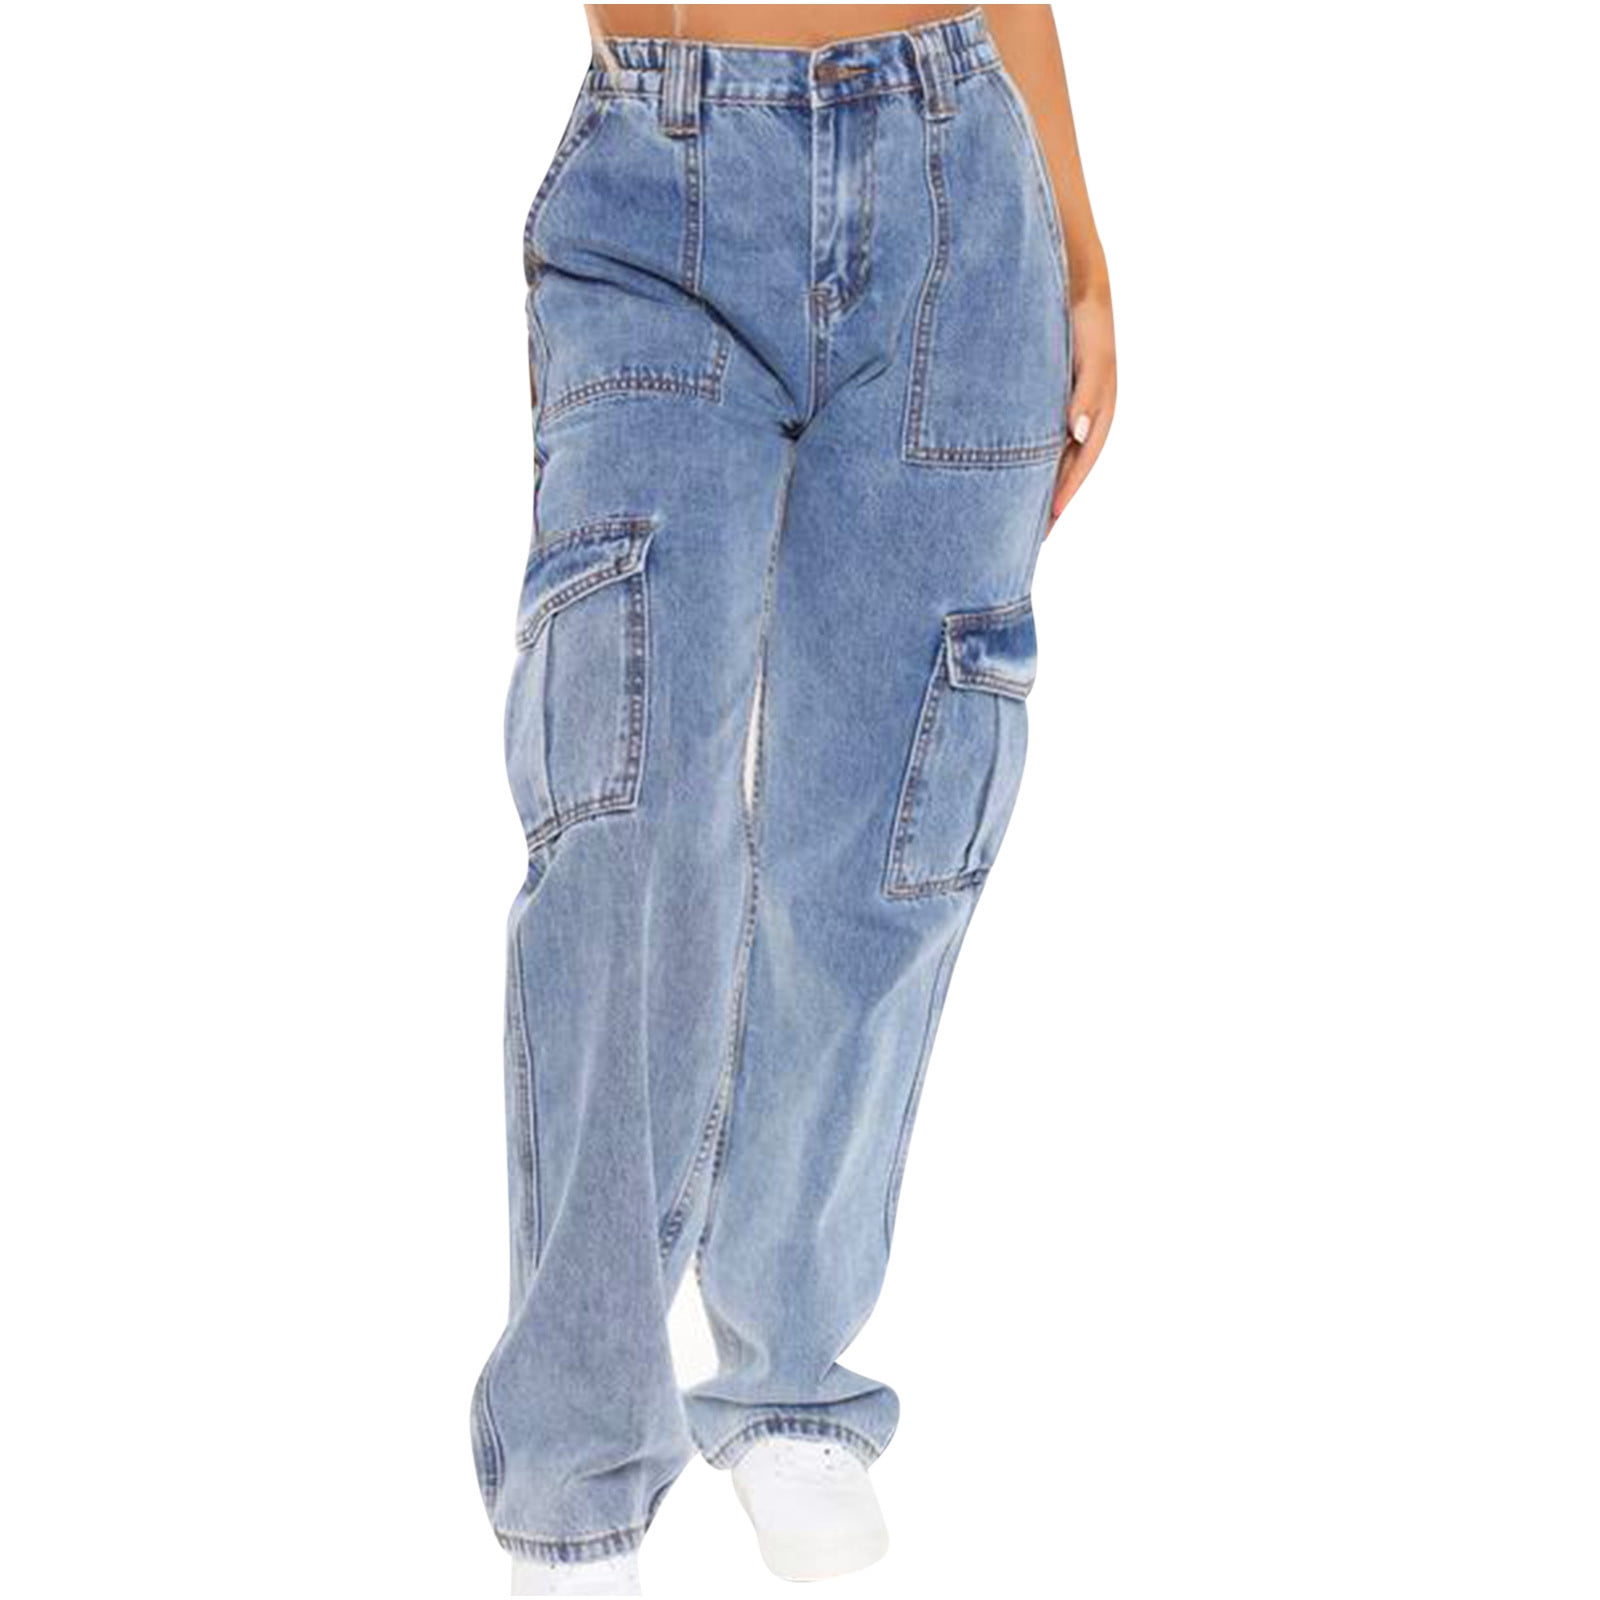  ZZSRJ Loose Jeans Retro High Waist Wide Leg Jeans Women's Blue  Street Fashion Straight Pants (Color : Light Blue, Size : 3X-Large) :  Clothing, Shoes & Jewelry